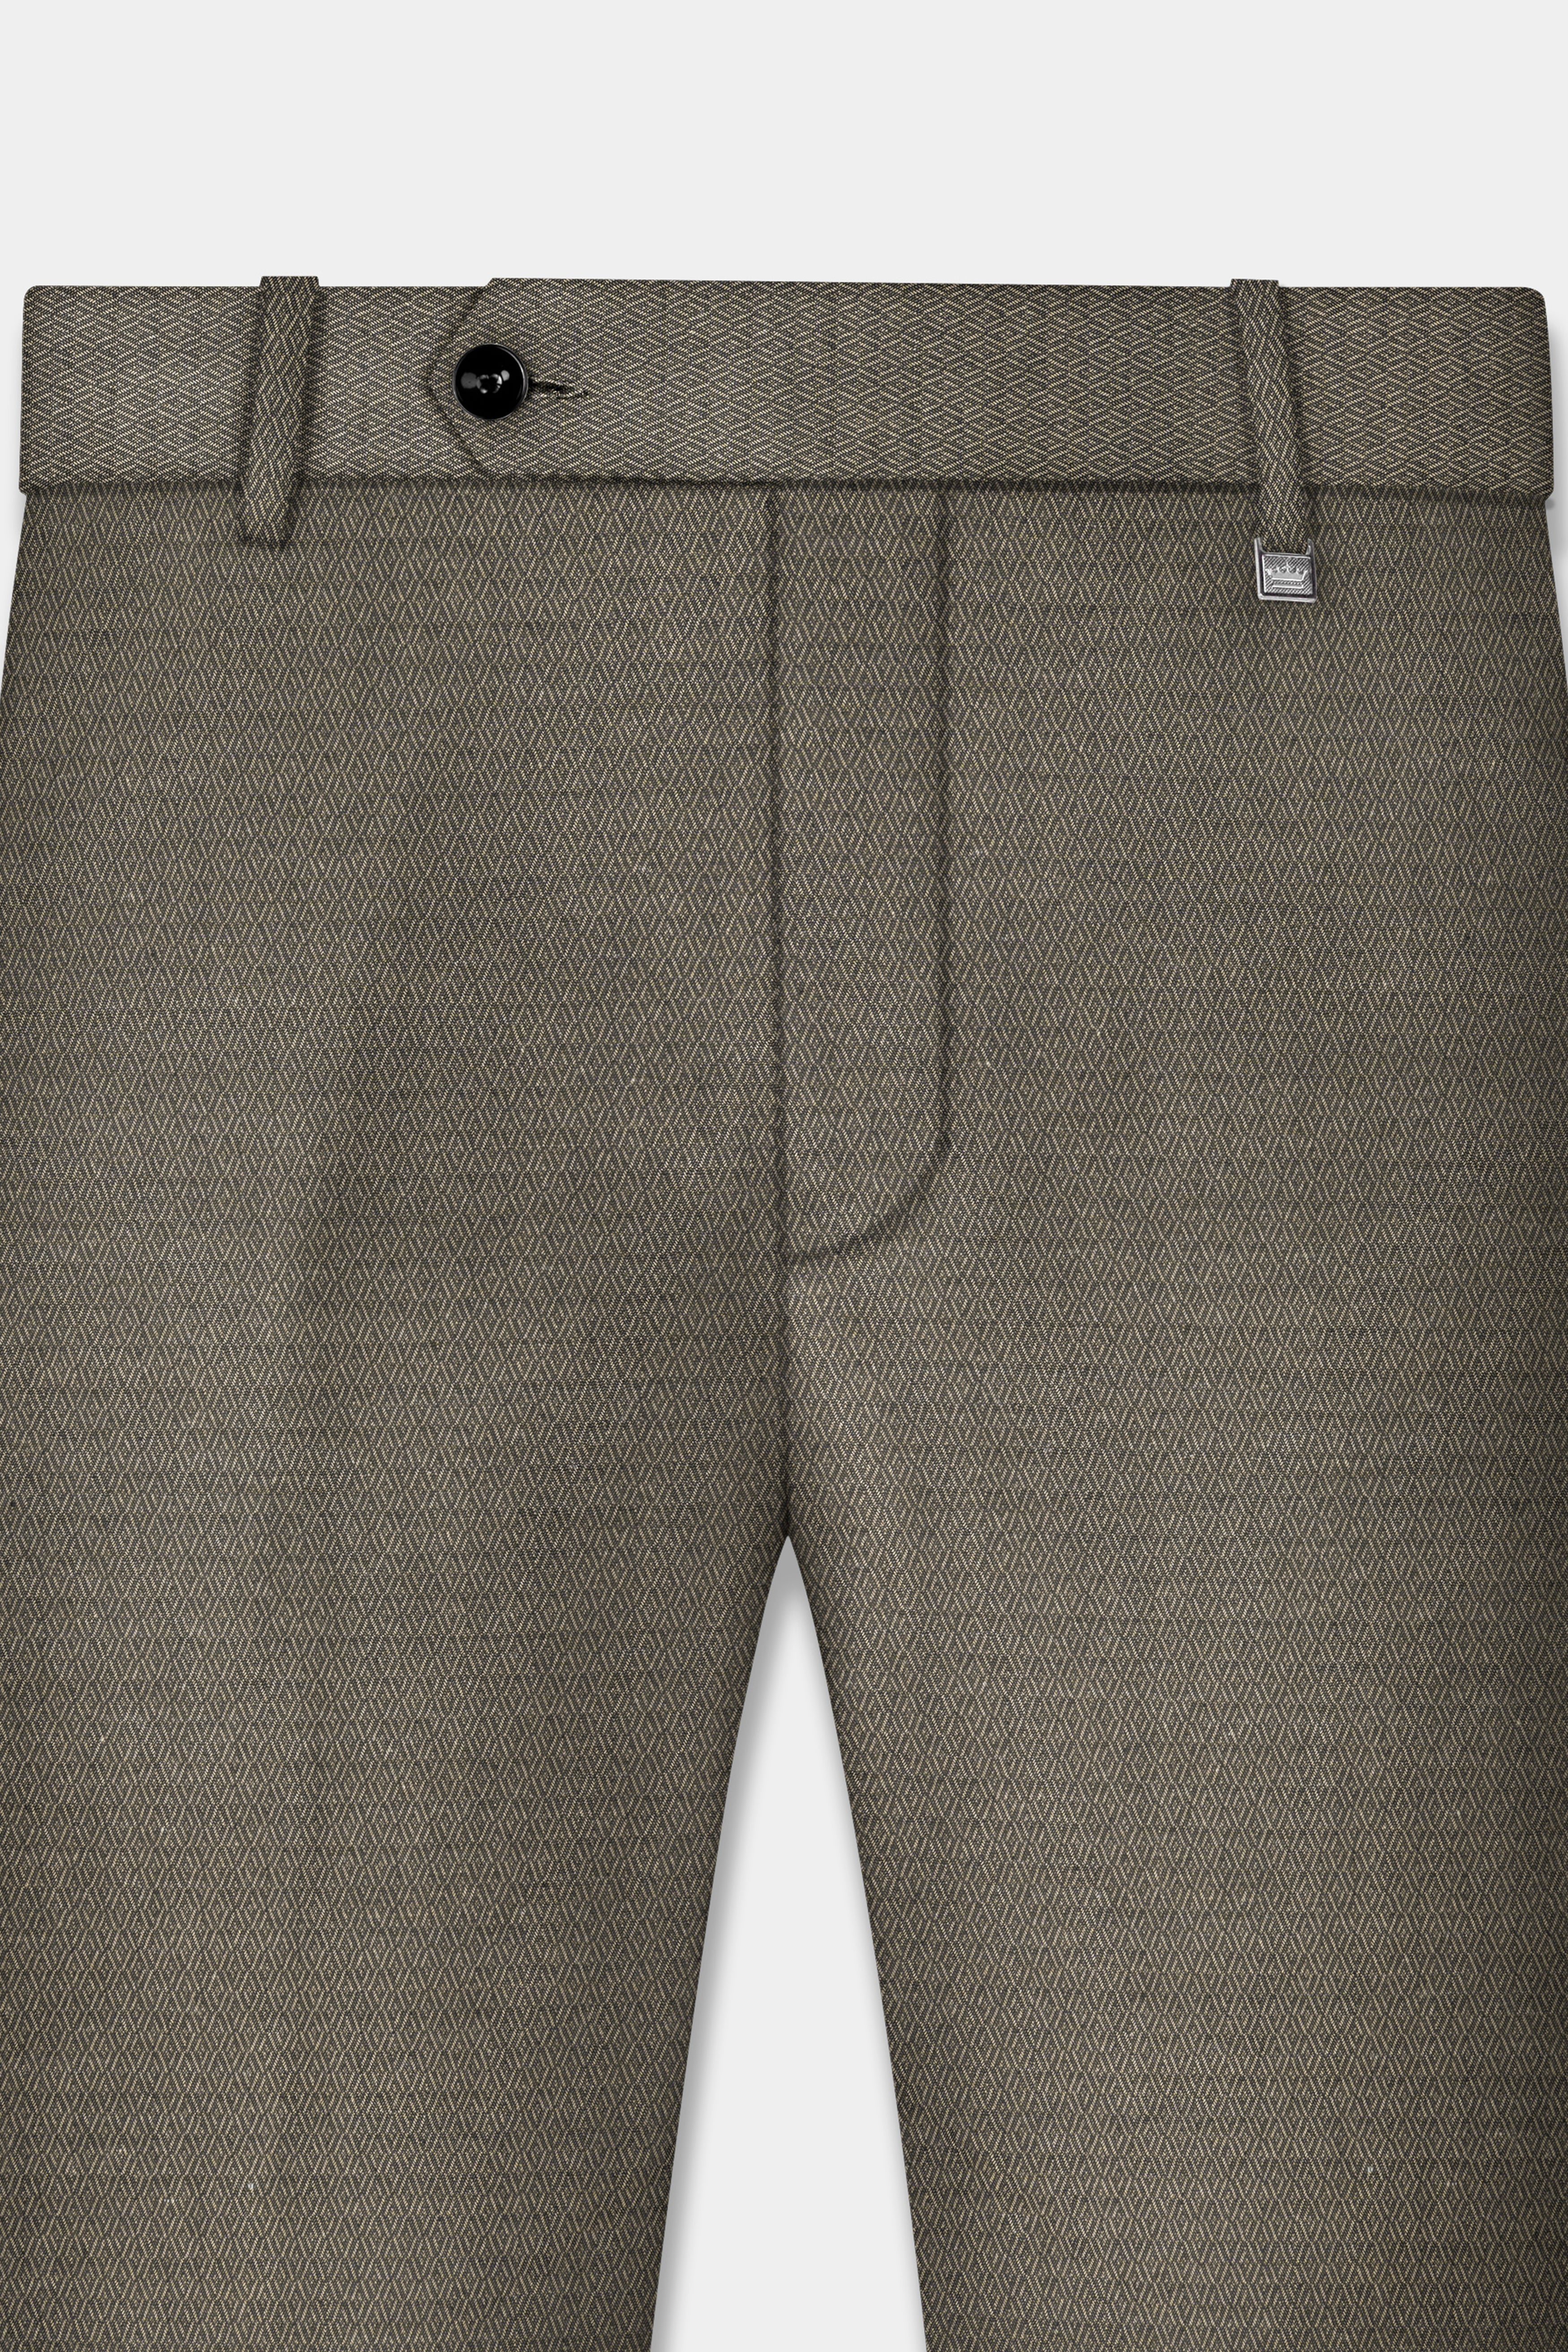 Wenge Brown Dobby Textured wool blend Pant